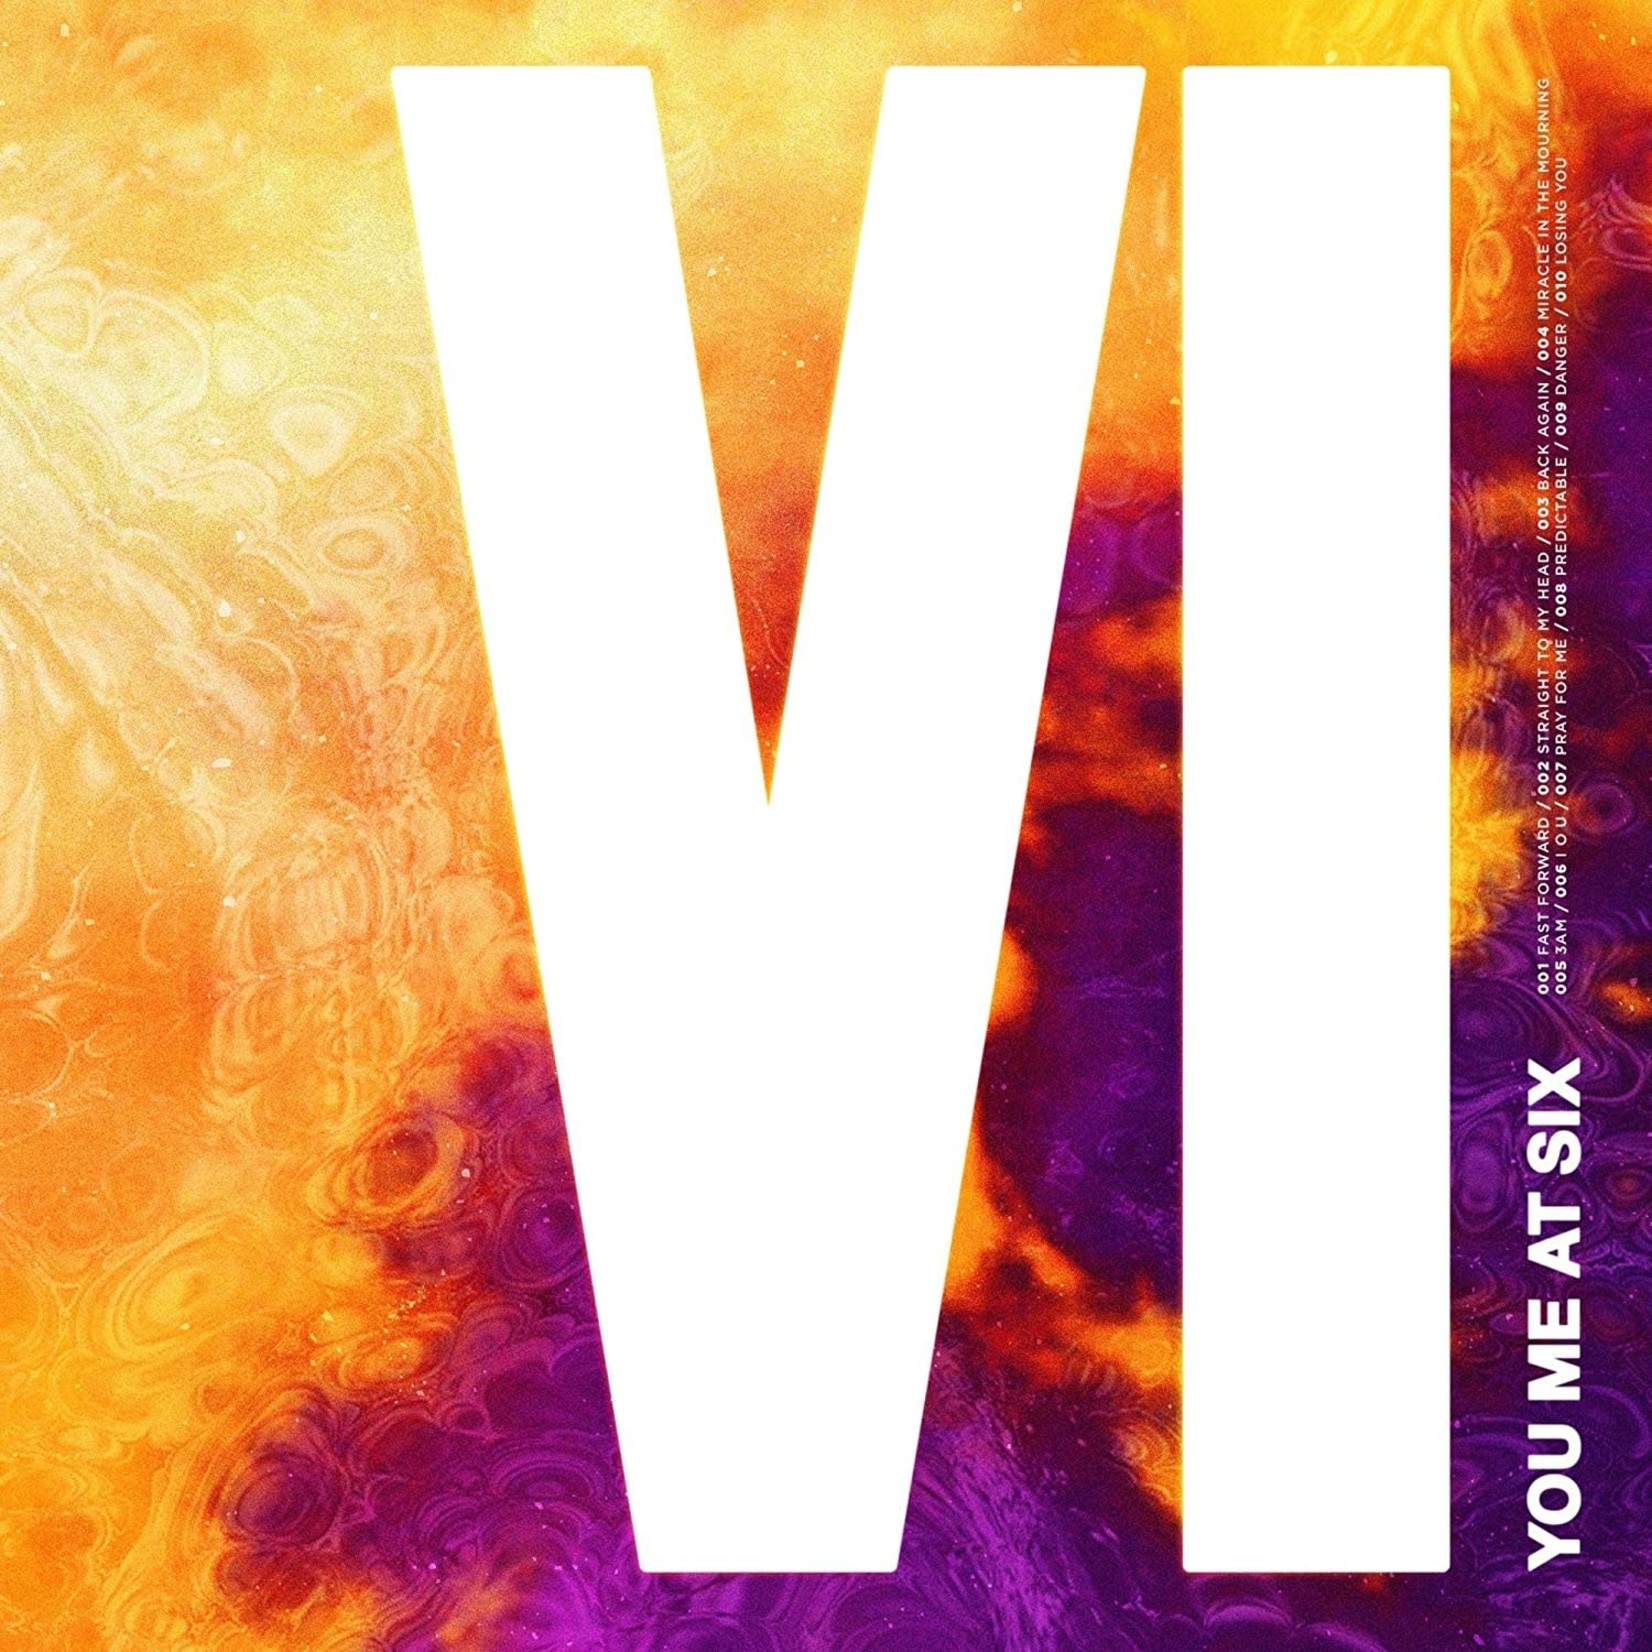 You Me At Six - VI [CD]